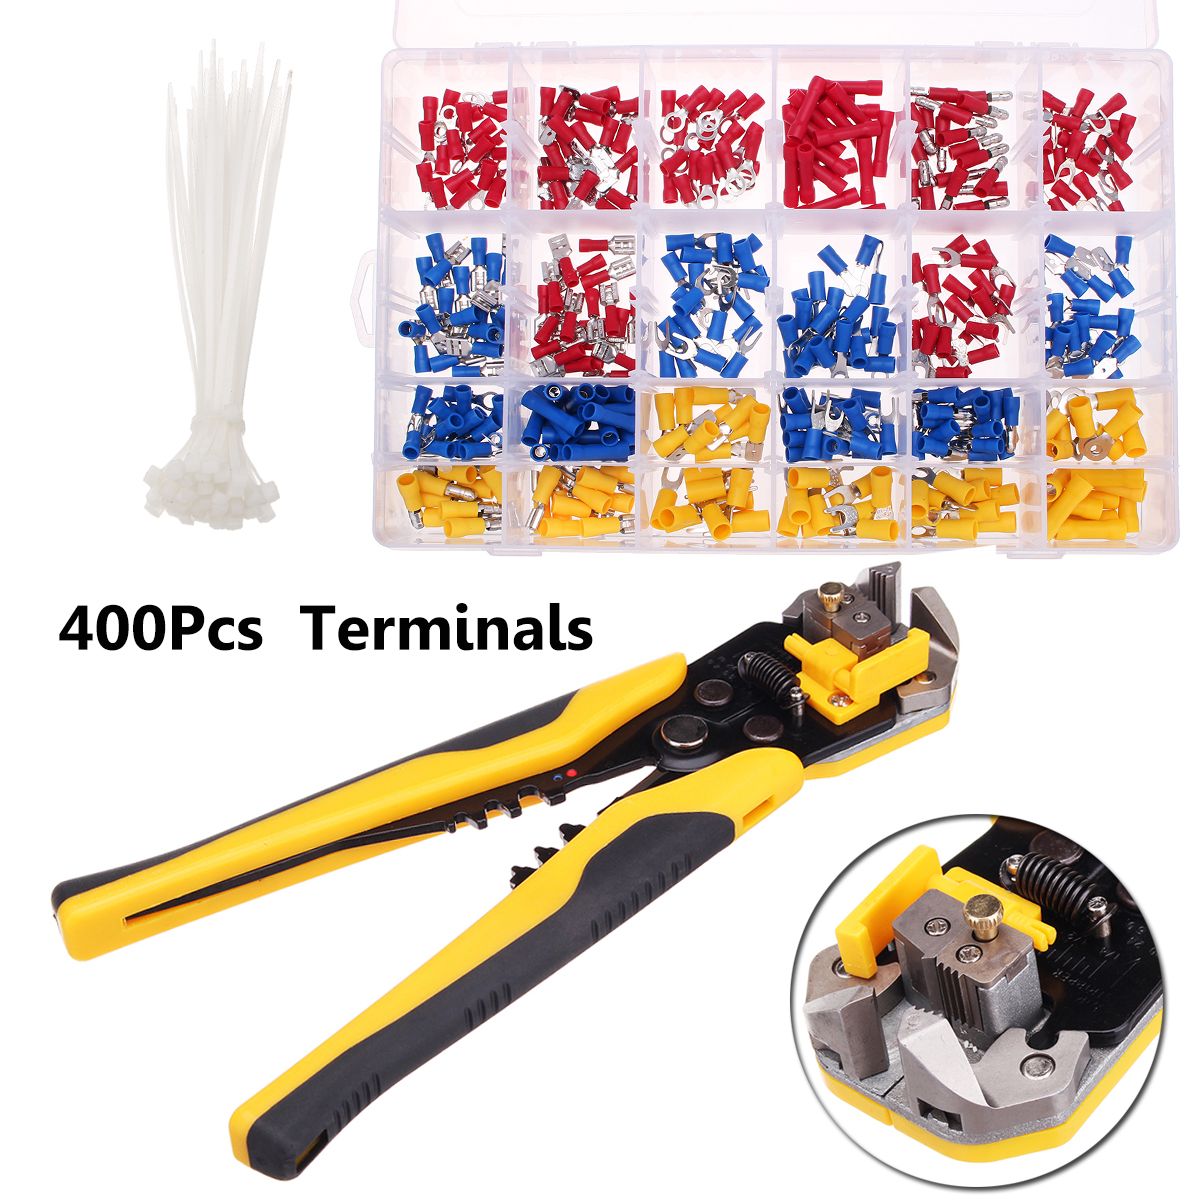 400Pcs-Connectors-Electrical-Wire-Terminal-Block-Kit-with-Cutter-Stripper-Plier-Crimper-1288140